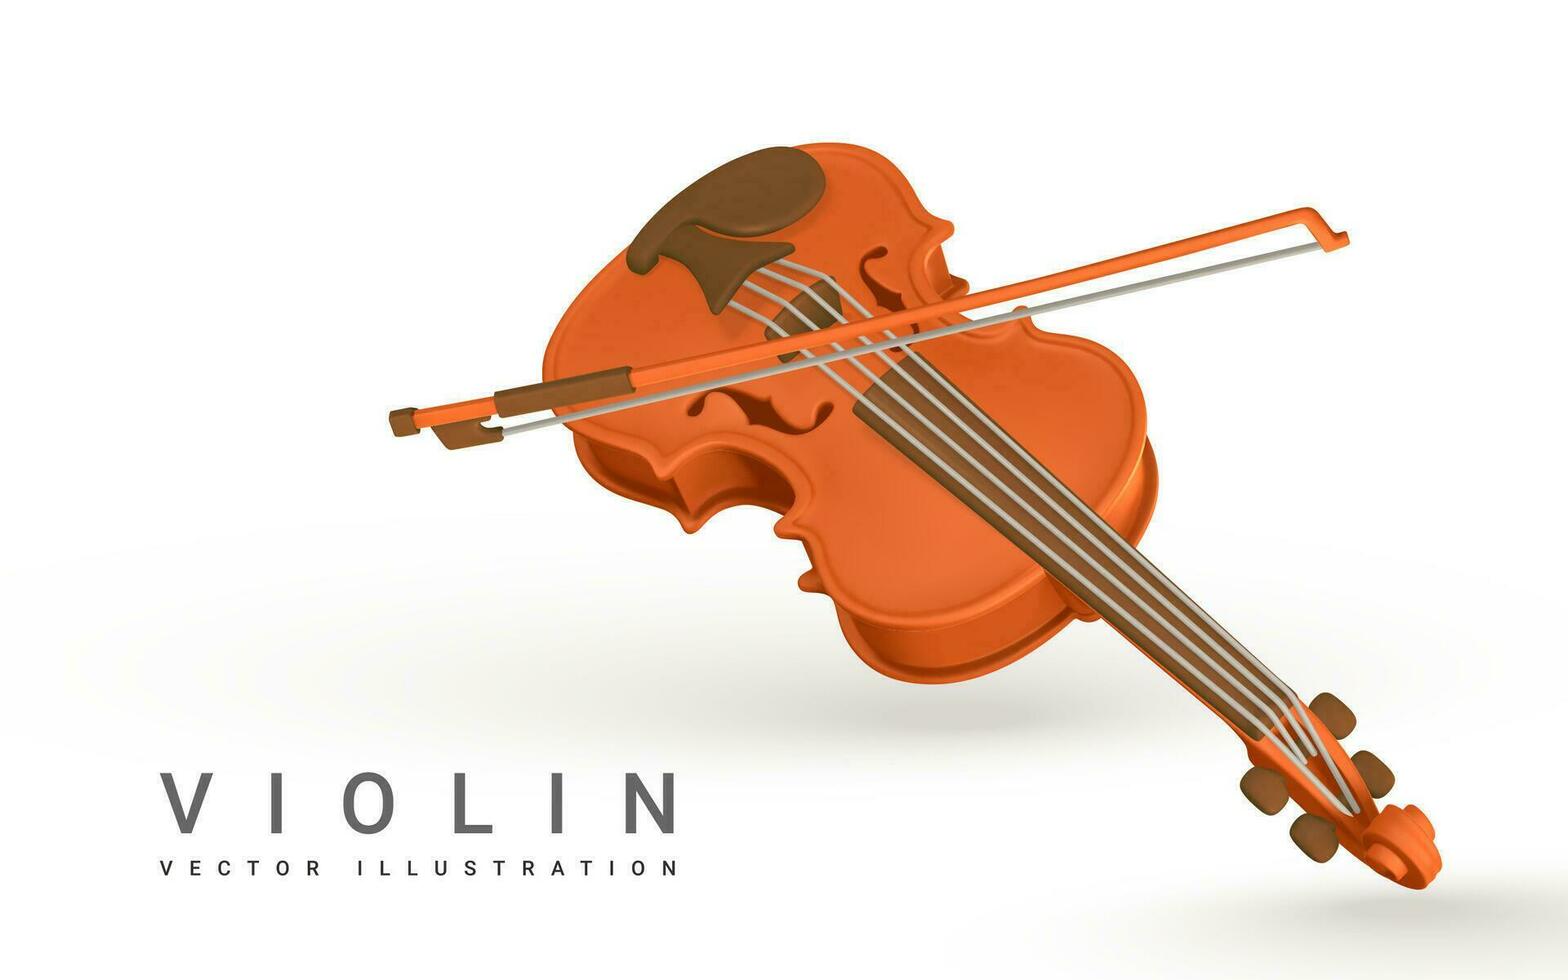 3d realistic violin for music concept design in plastic cartoon style. Vector illustration